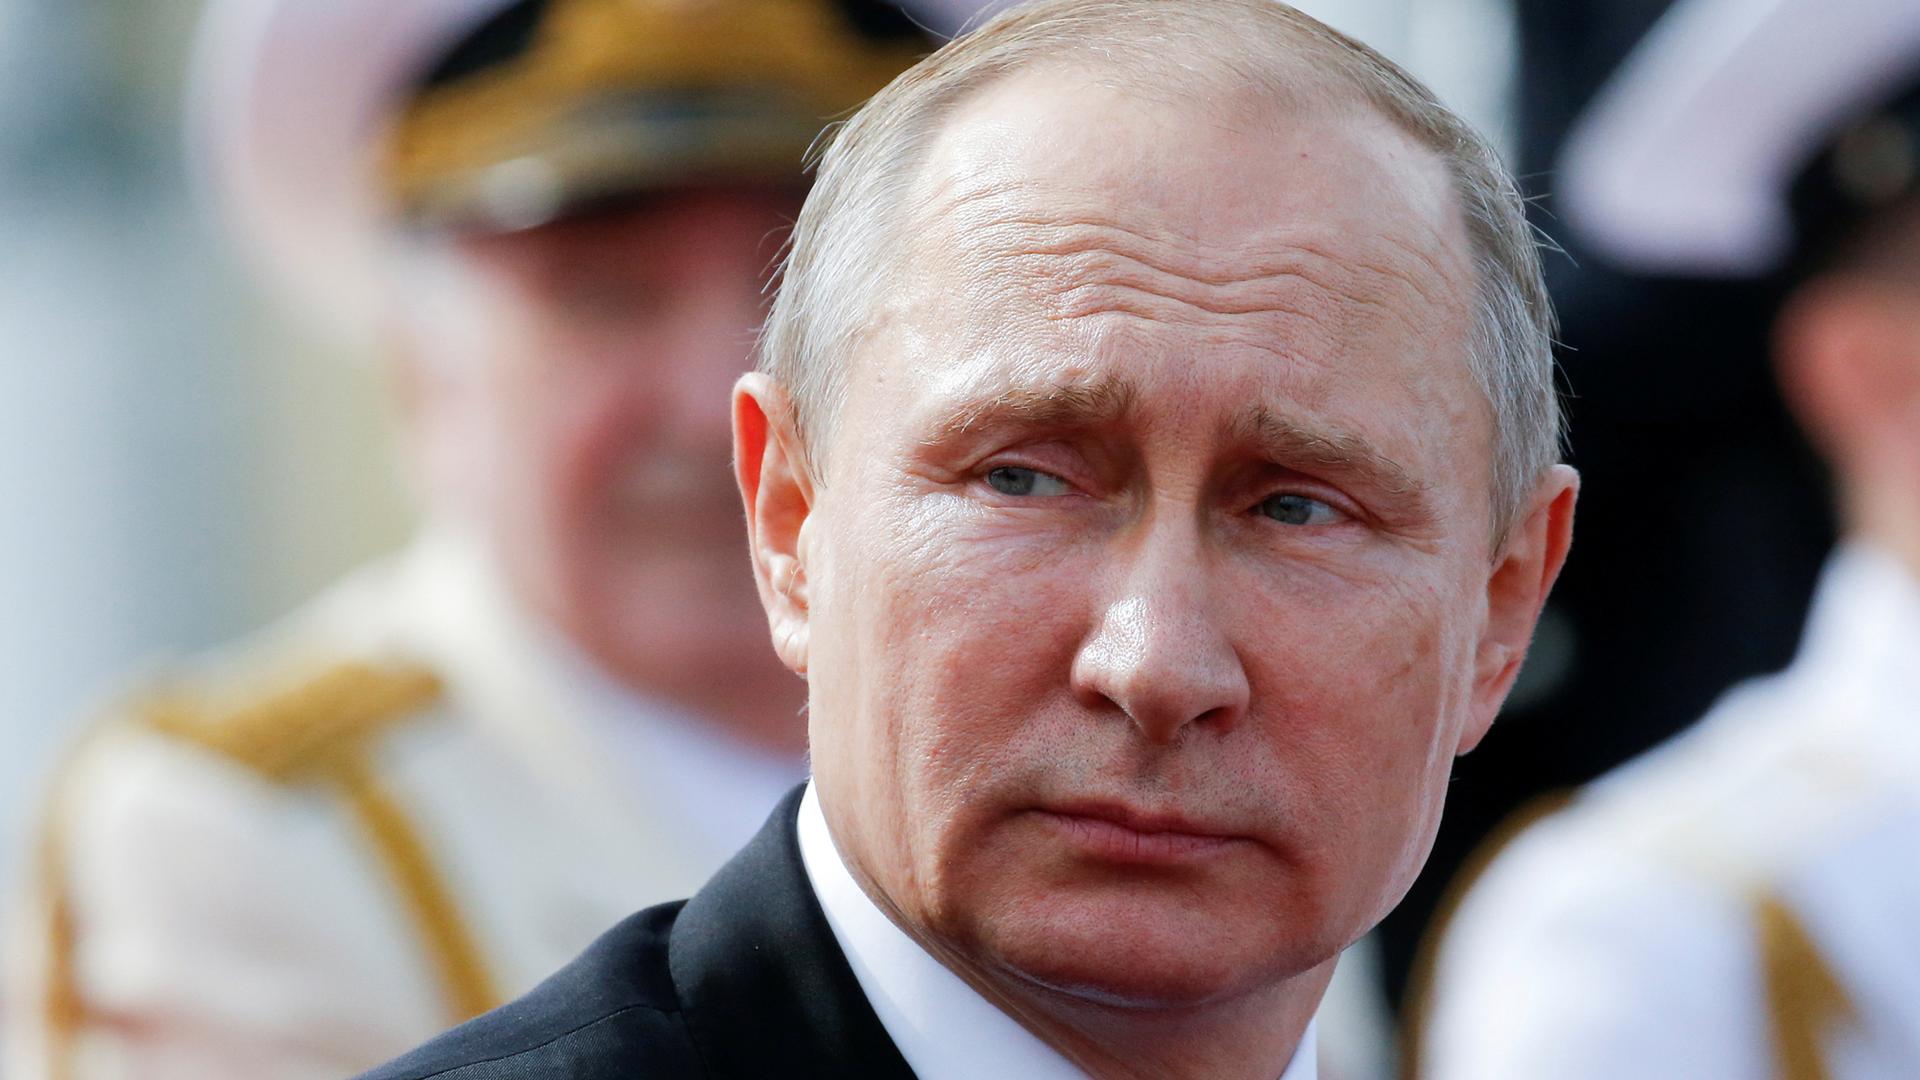 A close up photograph of Russian President Vladimir Putin